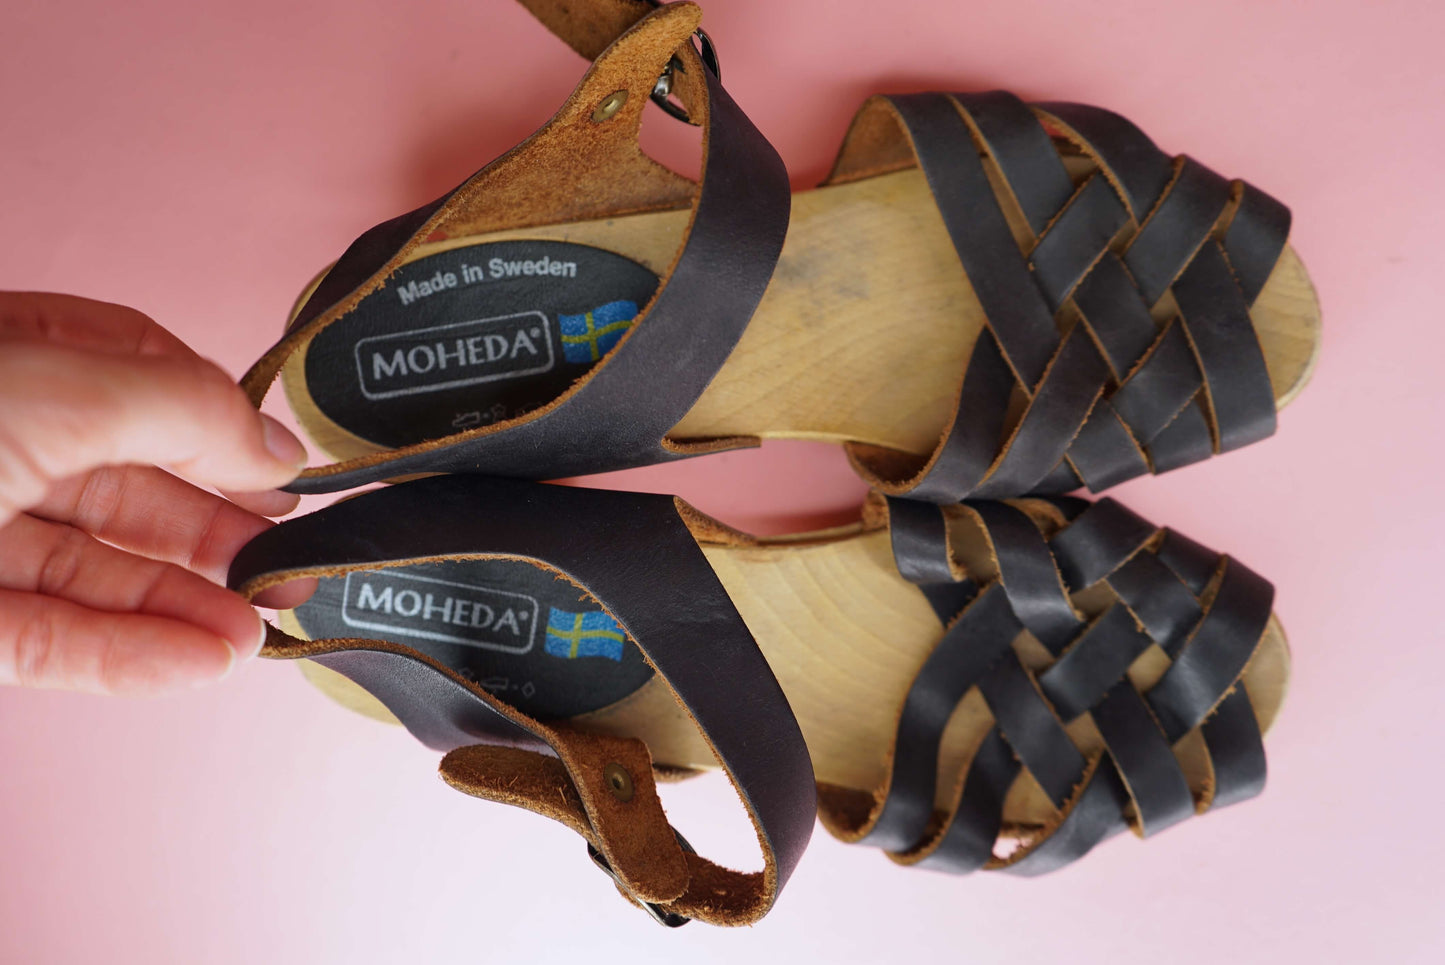 Swedish Clogs Wooden Sandals Low Heel Black Oiled Leather Mary Jane Clogs Peep Toe Moheda Clogs Handmade UK Size 4.5-5/ EU 37.5-38